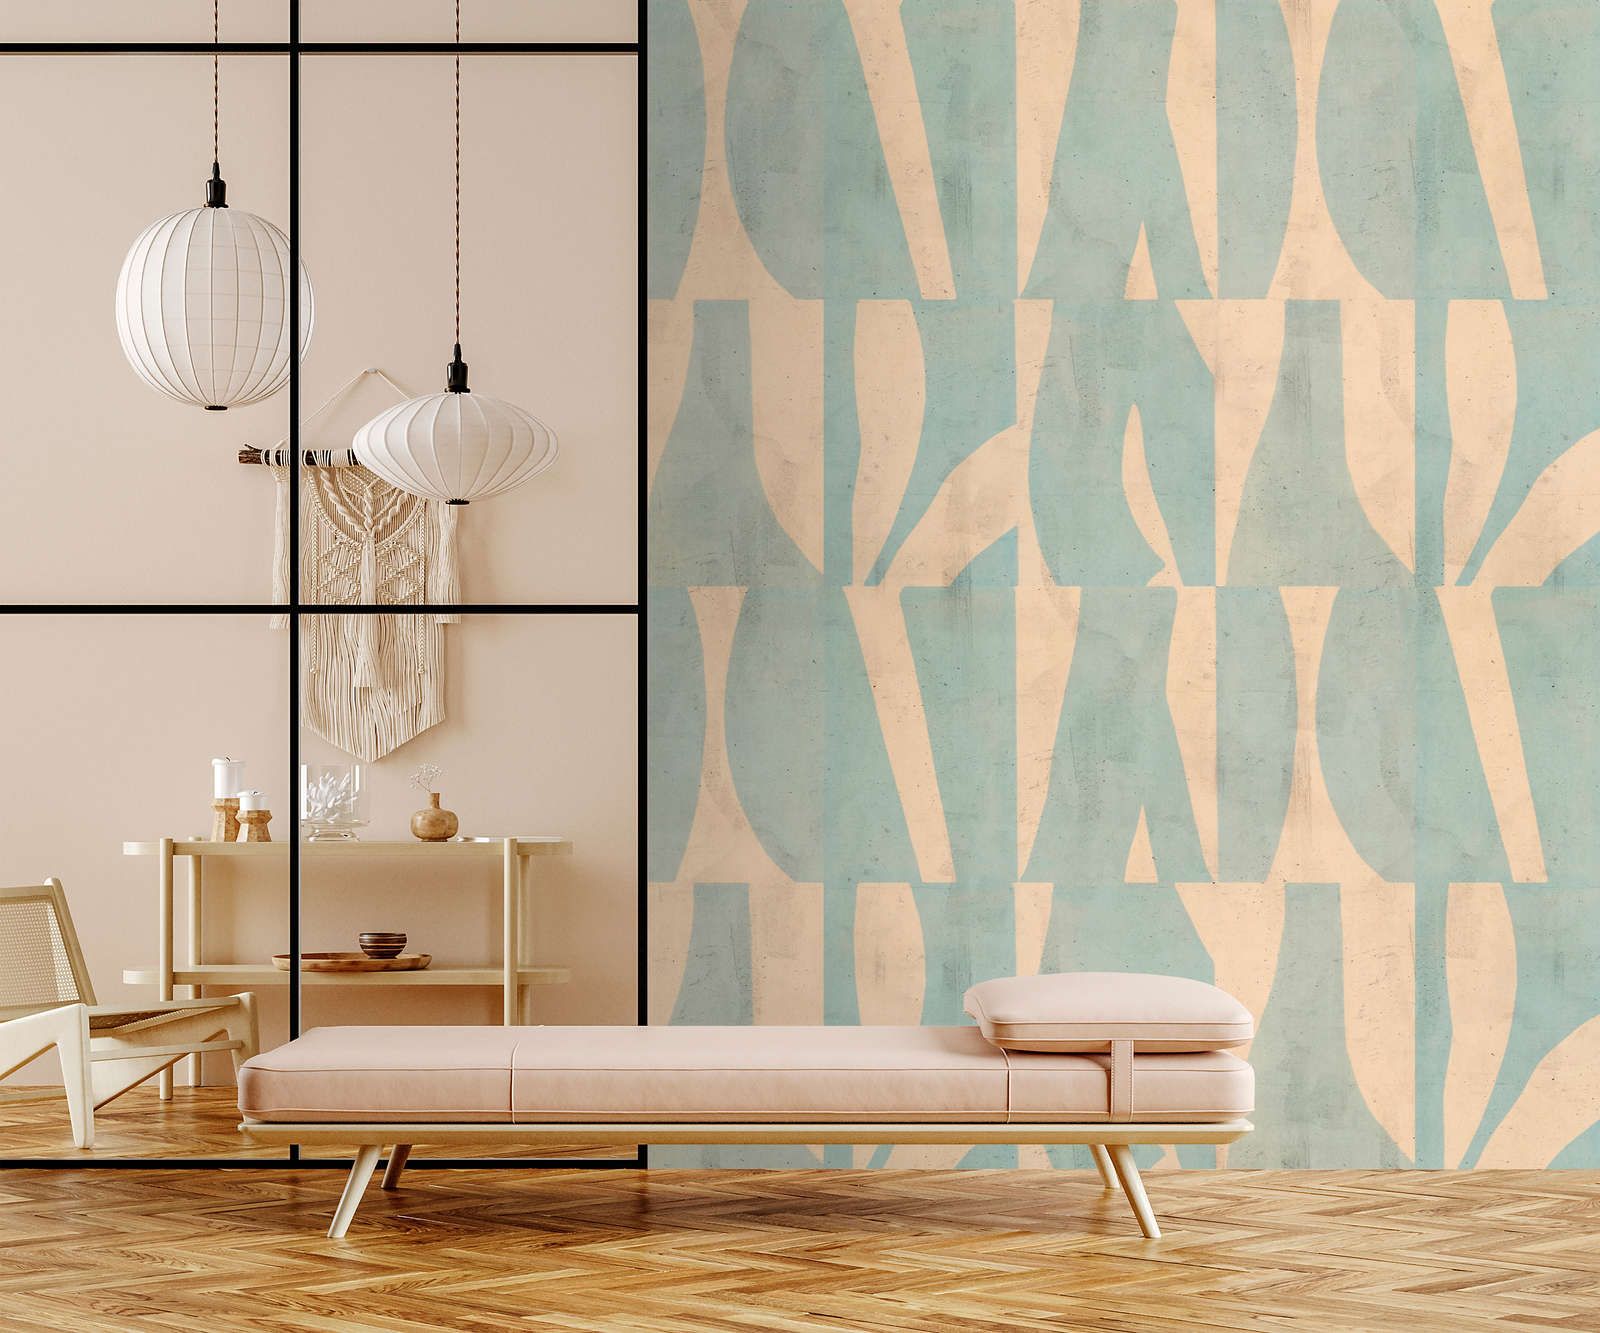             Digital behang »laila« - Grafisch patroon op betonpleistertextuur - Beige, mintgroen | Glad, licht glanzend premium vliesmateriaal
        